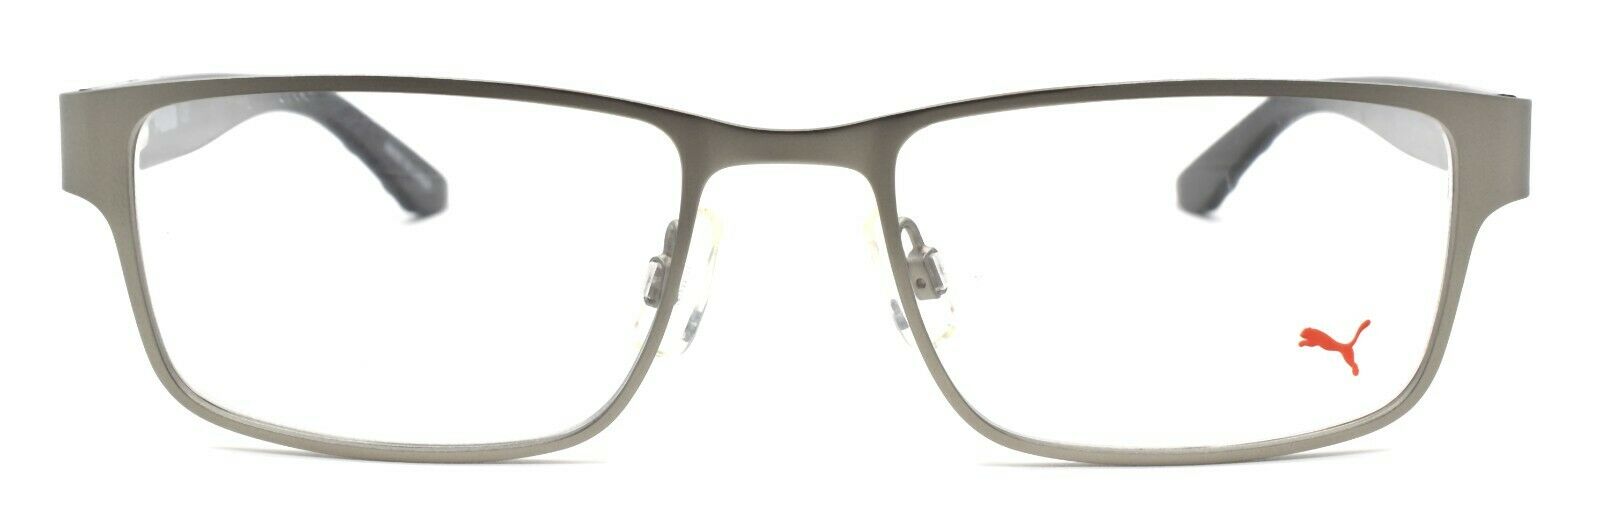 2-PUMA PU0024O 004 Men's Eyeglasses Frames 53-18-140 Ruthenium / Black-889652002217-IKSpecs